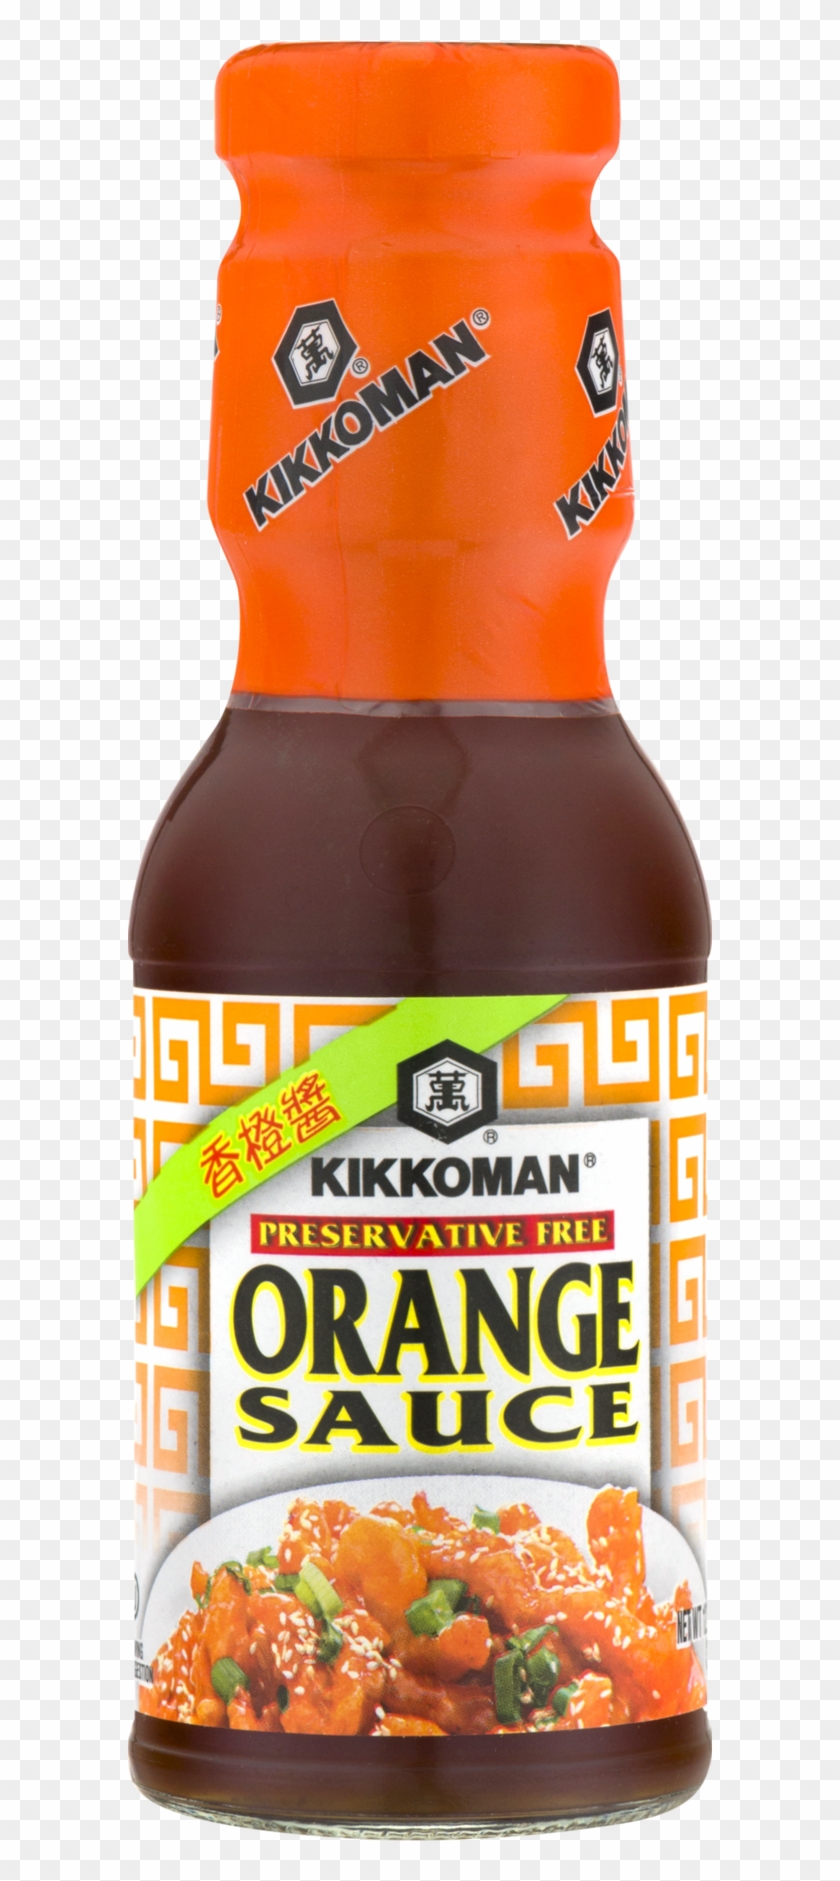 Sauce Kikkoman Orange Sauce 12.5 Oz Preserved Free Clipart #4733873